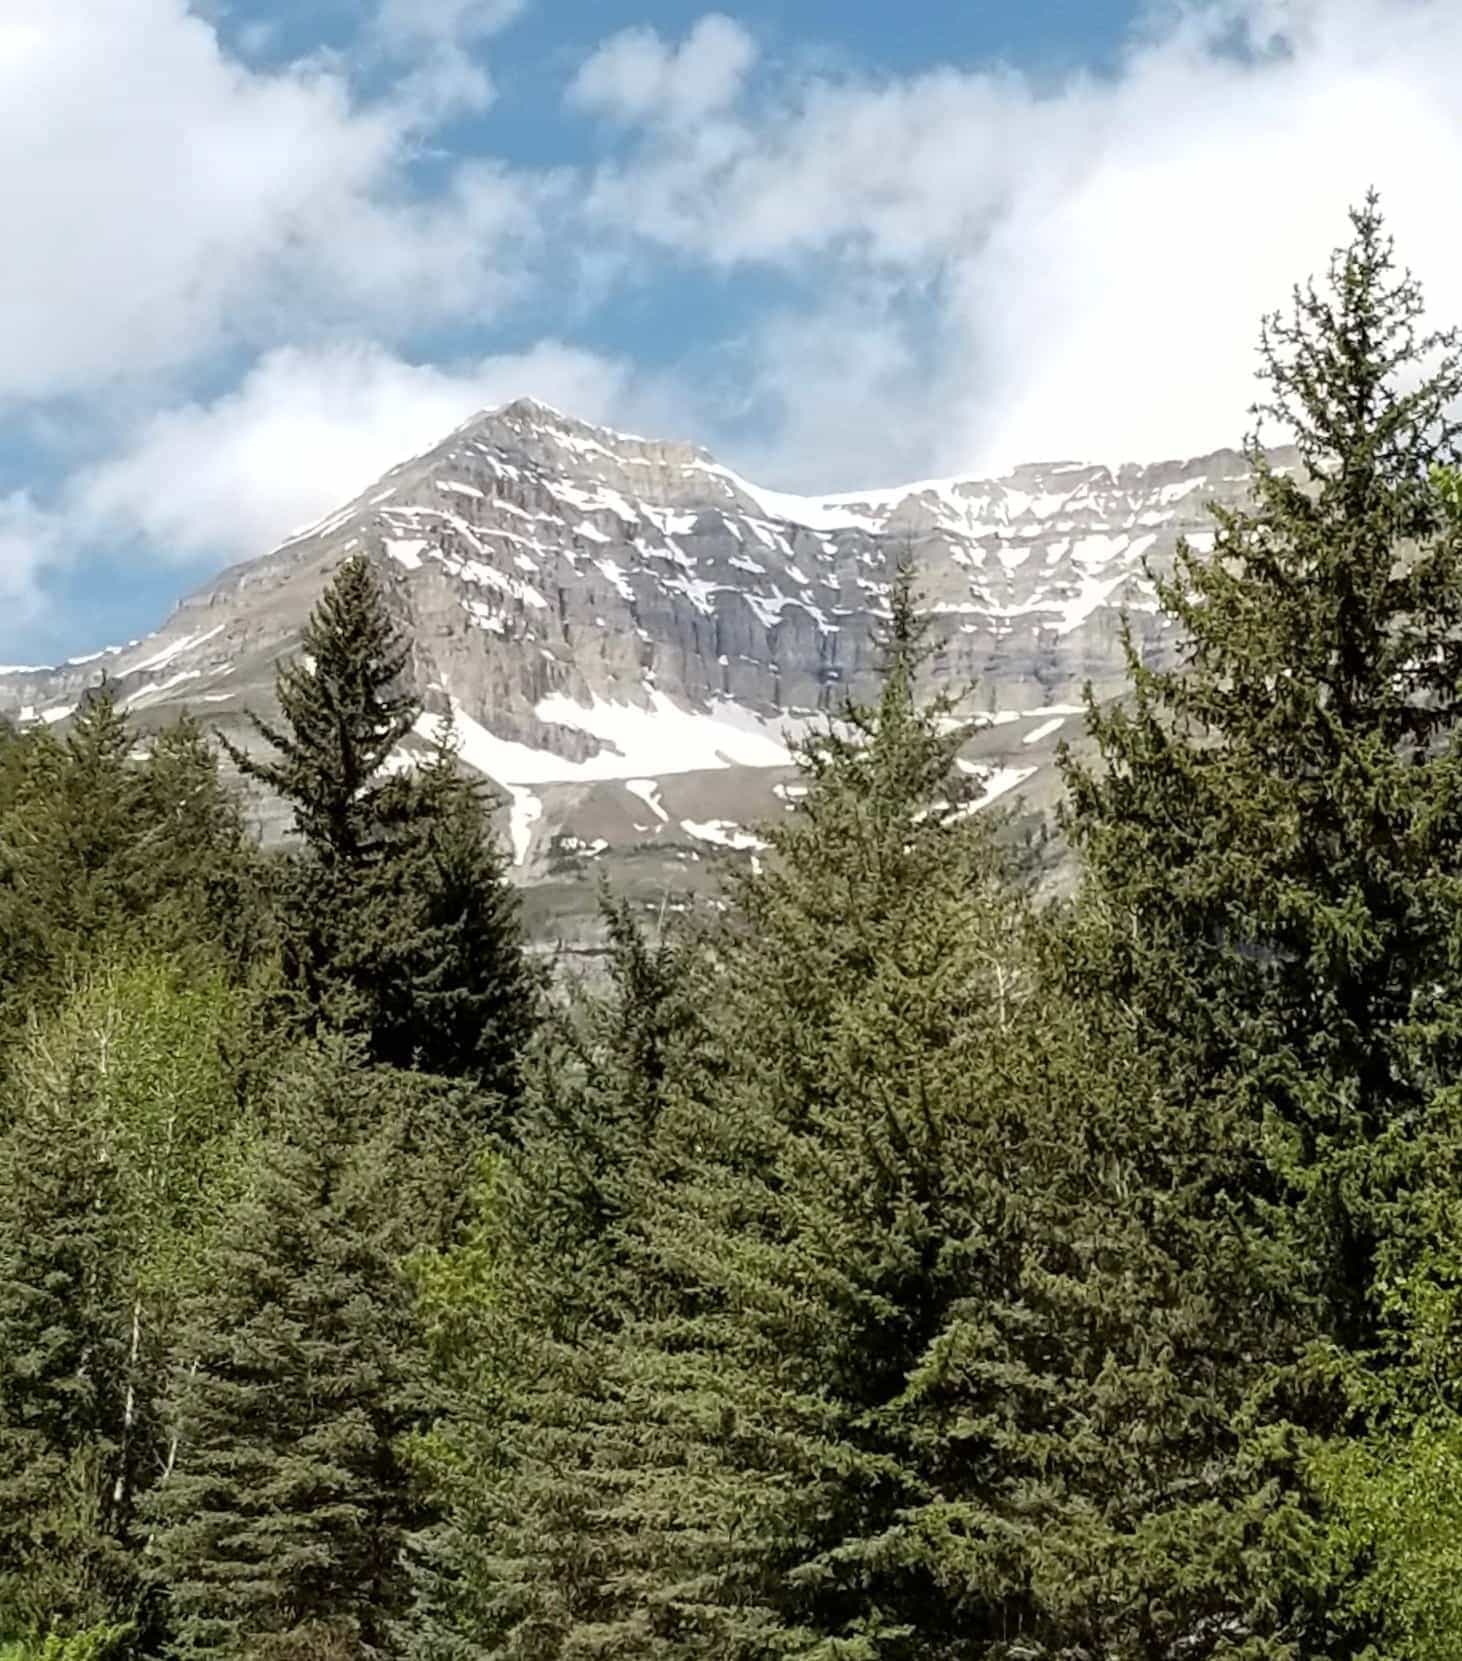 View of Mount Timpanogos from Sundance Ski Resort